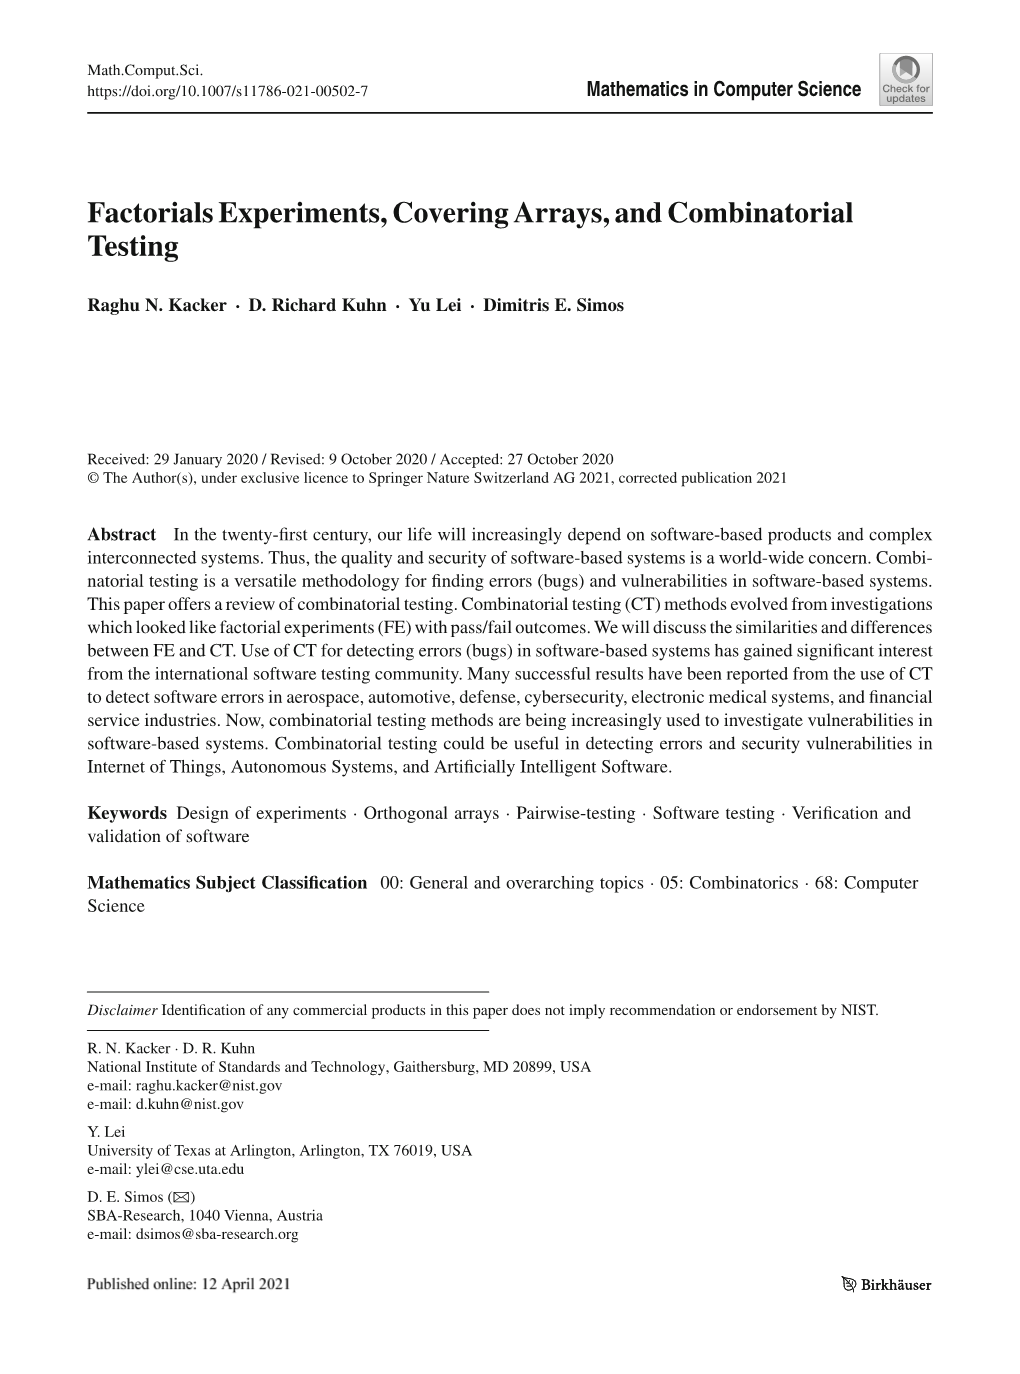 Factorials Experiments, Covering Arrays, and Combinatorial Testing